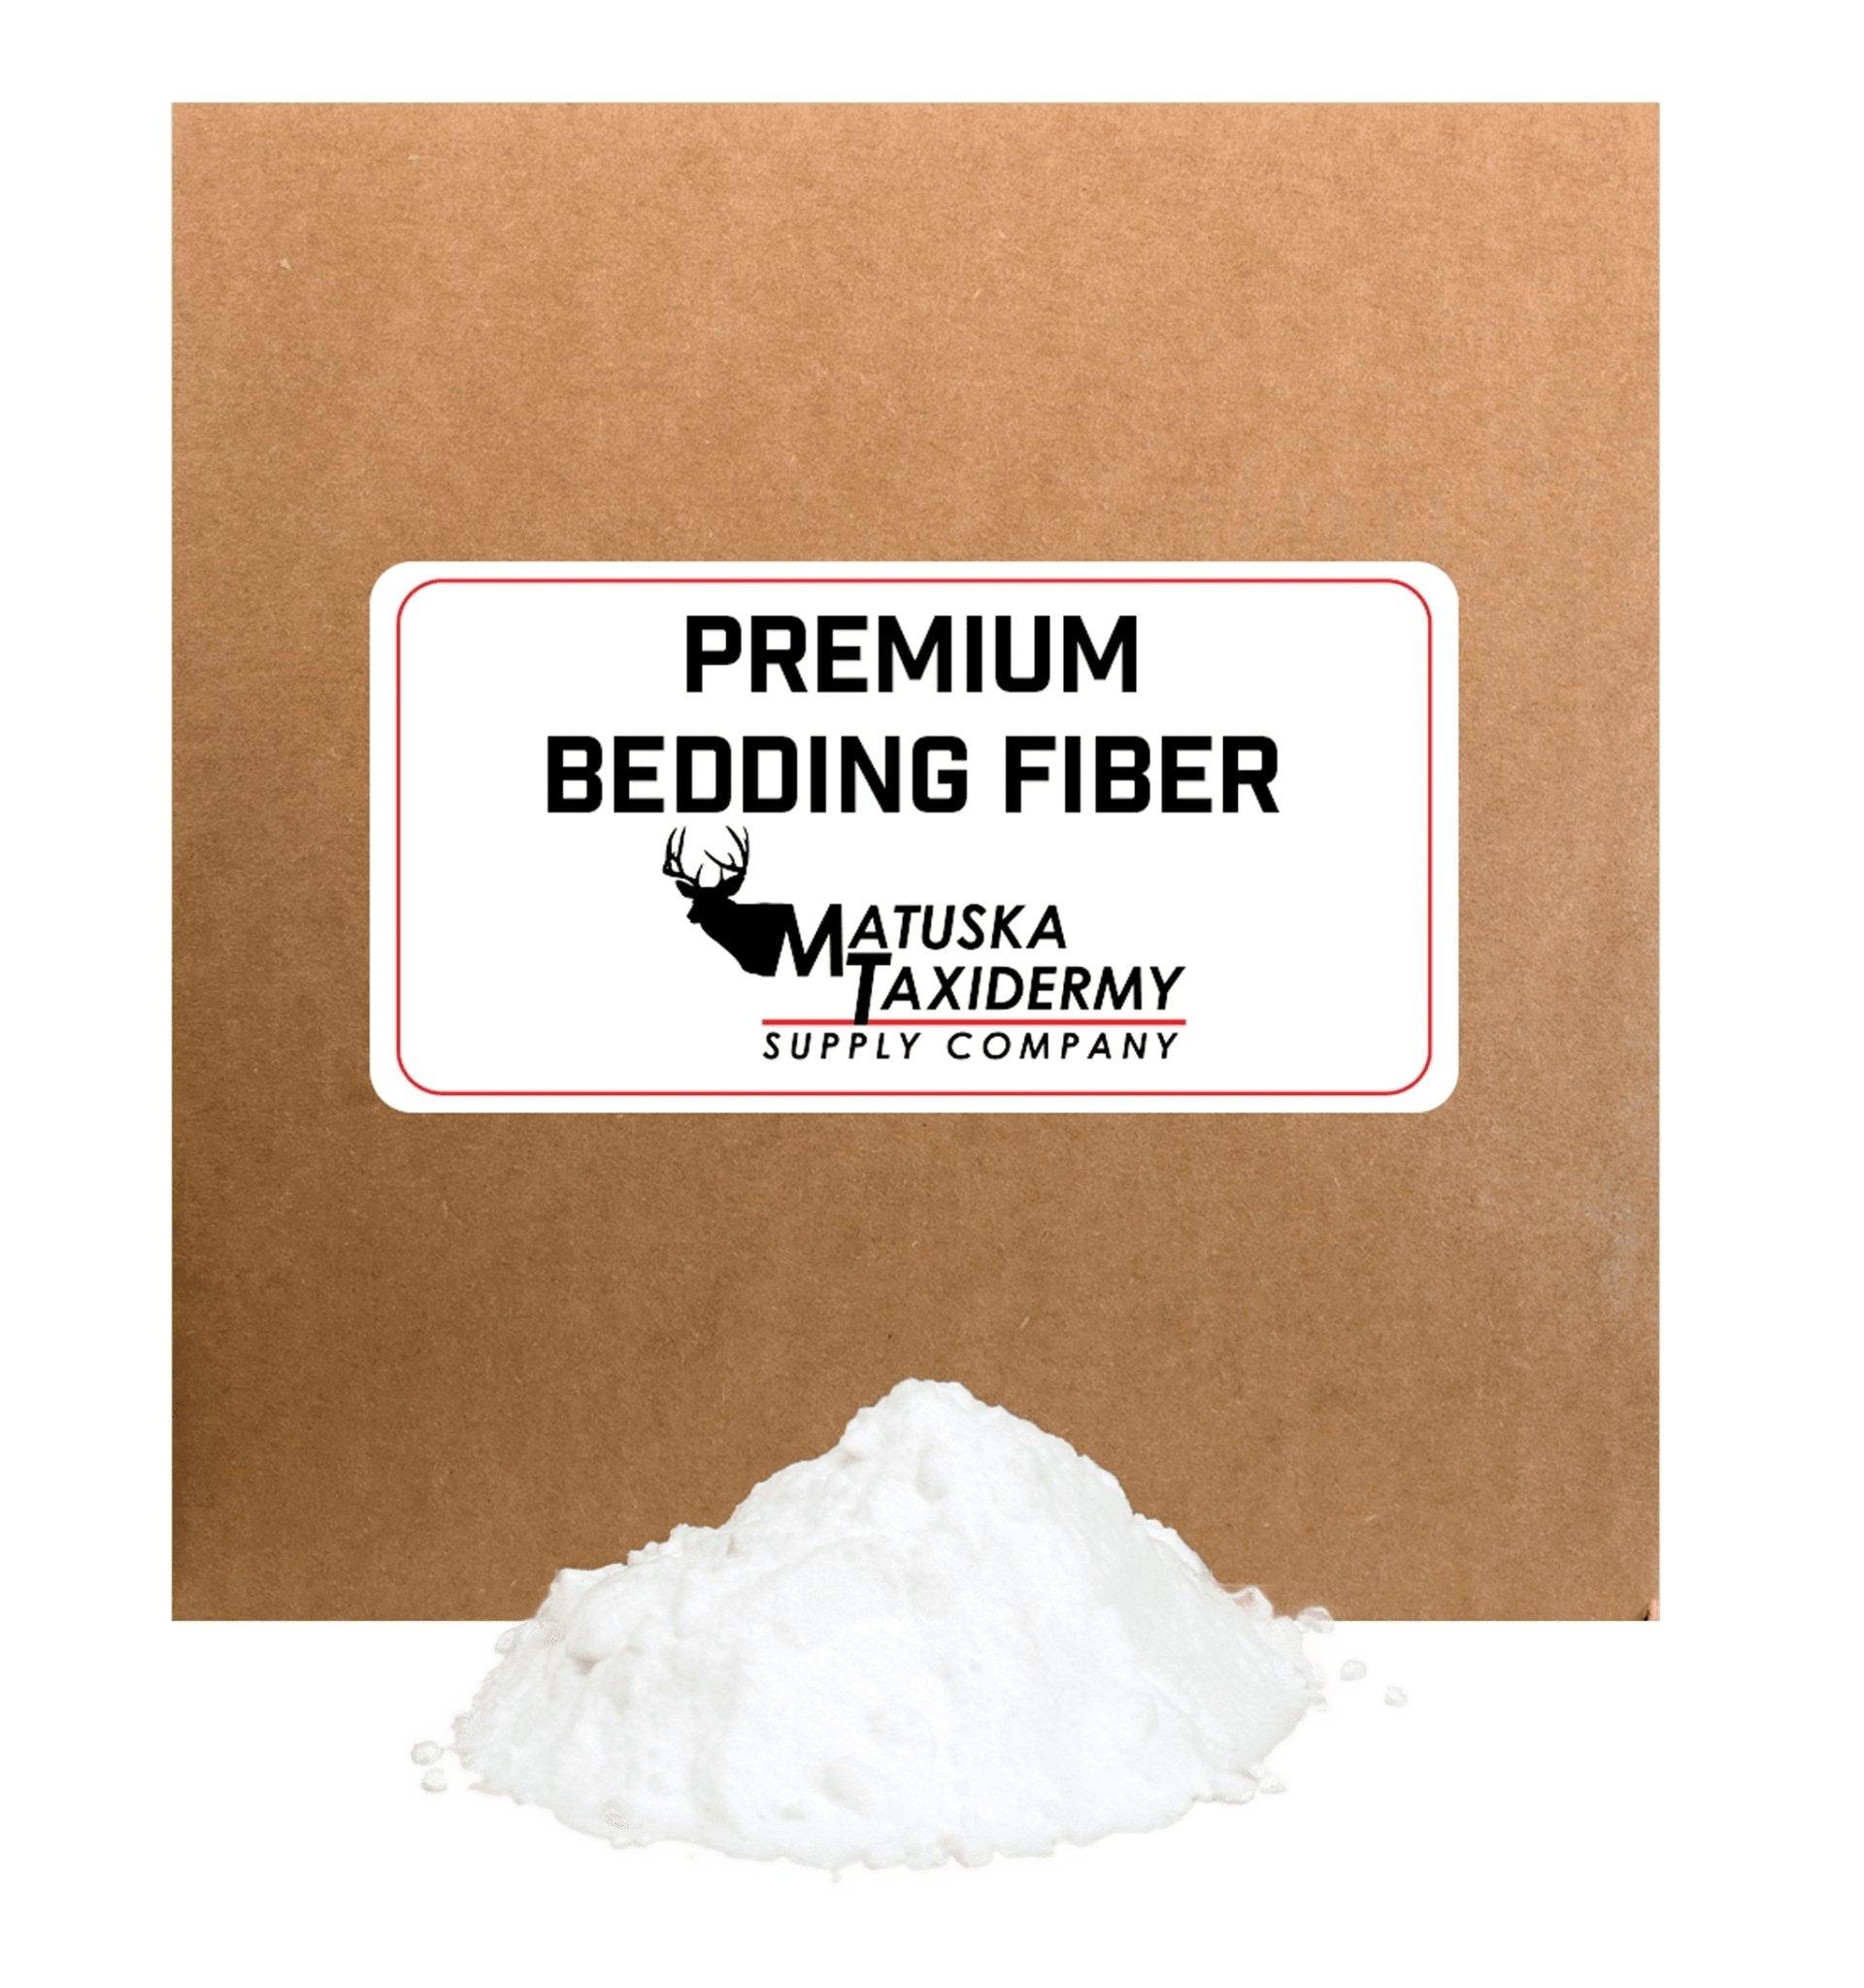 Premium Bedding Fiber - Matuska Taxidermy Supply Company